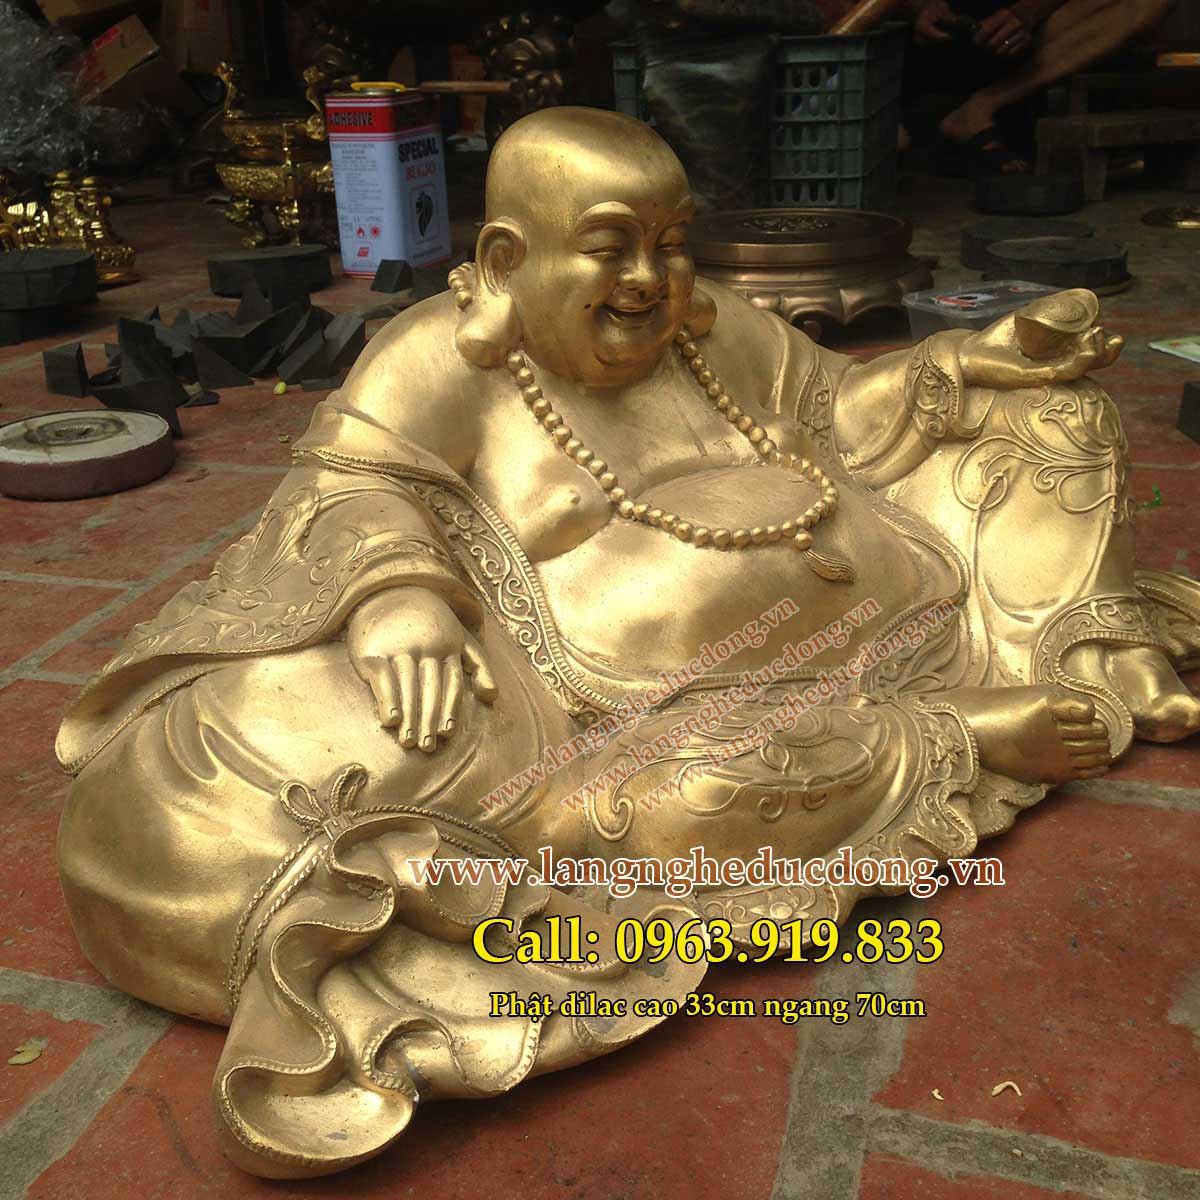 langngheducdong.vn - Phật Di Lặc tựa bao bố dâng tiền cao 33cmx70cm